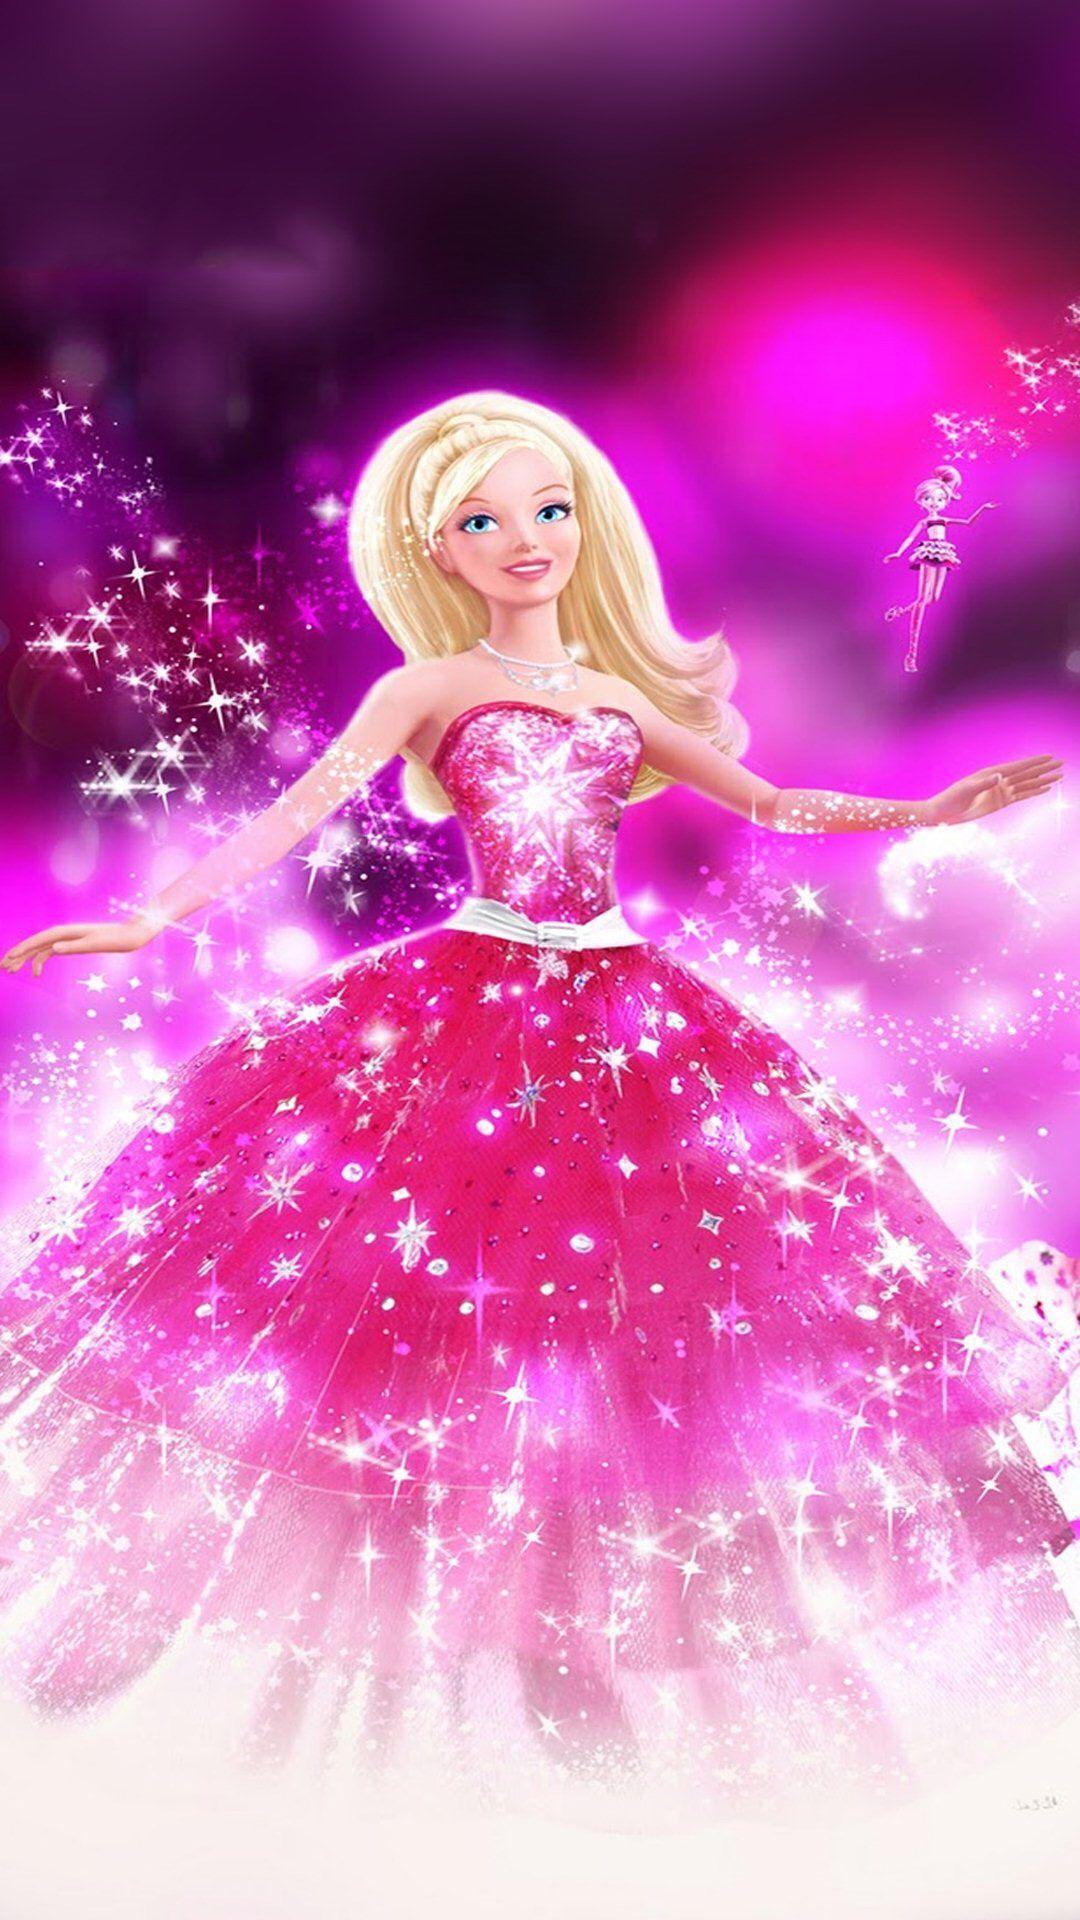 Univorn barbie pink  Wallpaper iphone cute Iphone wallpaper Barbie